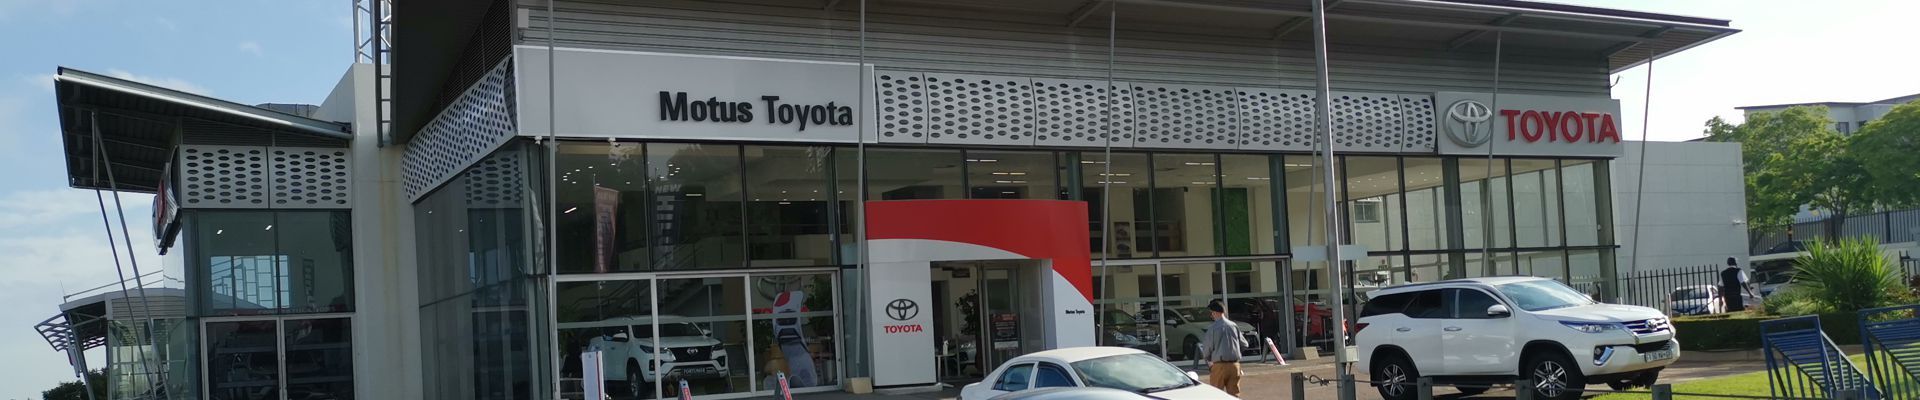 Motus Toyota Strijdompark dealer image0